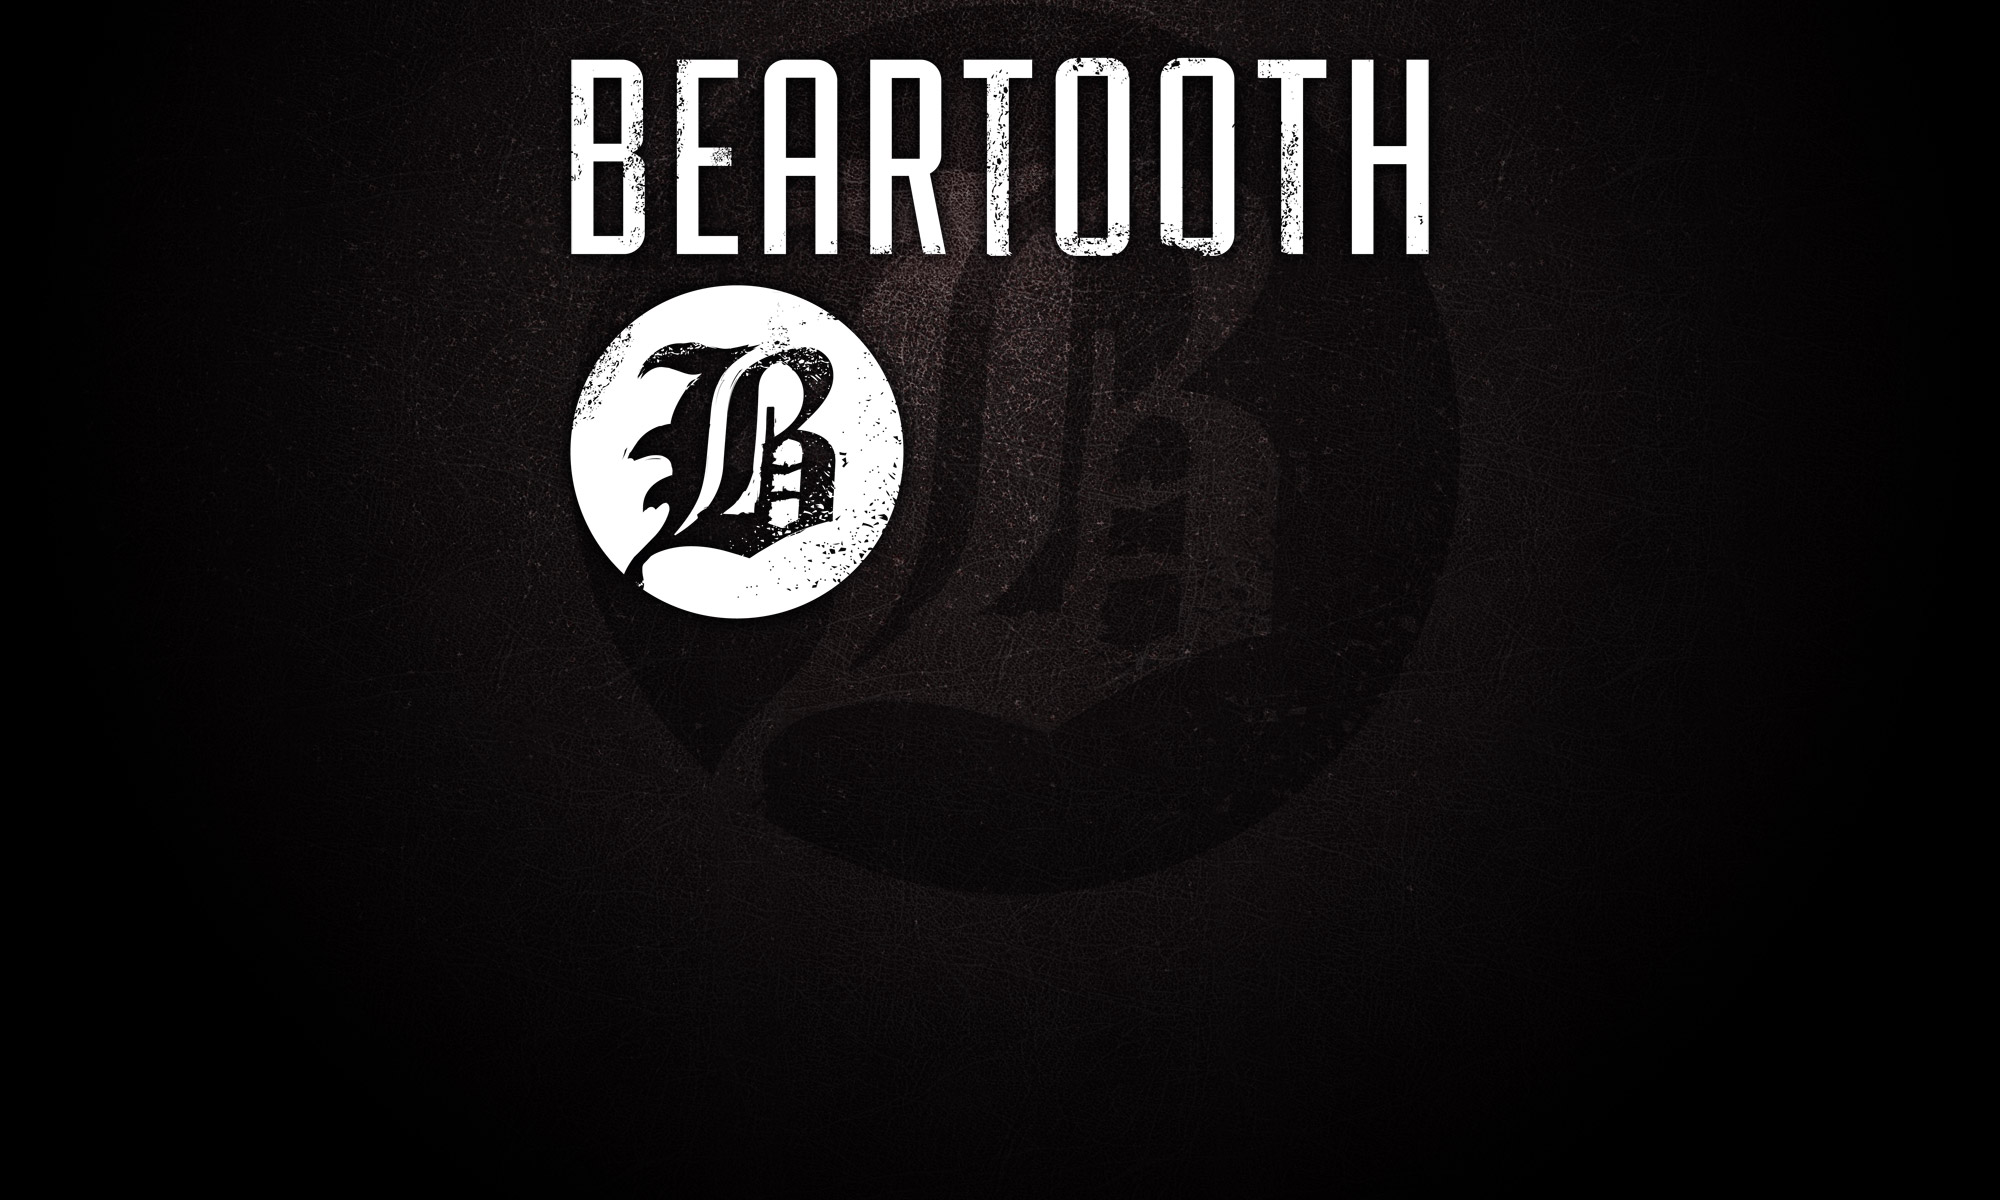 Beartooth Band Wallpaper - WallpaperSafari